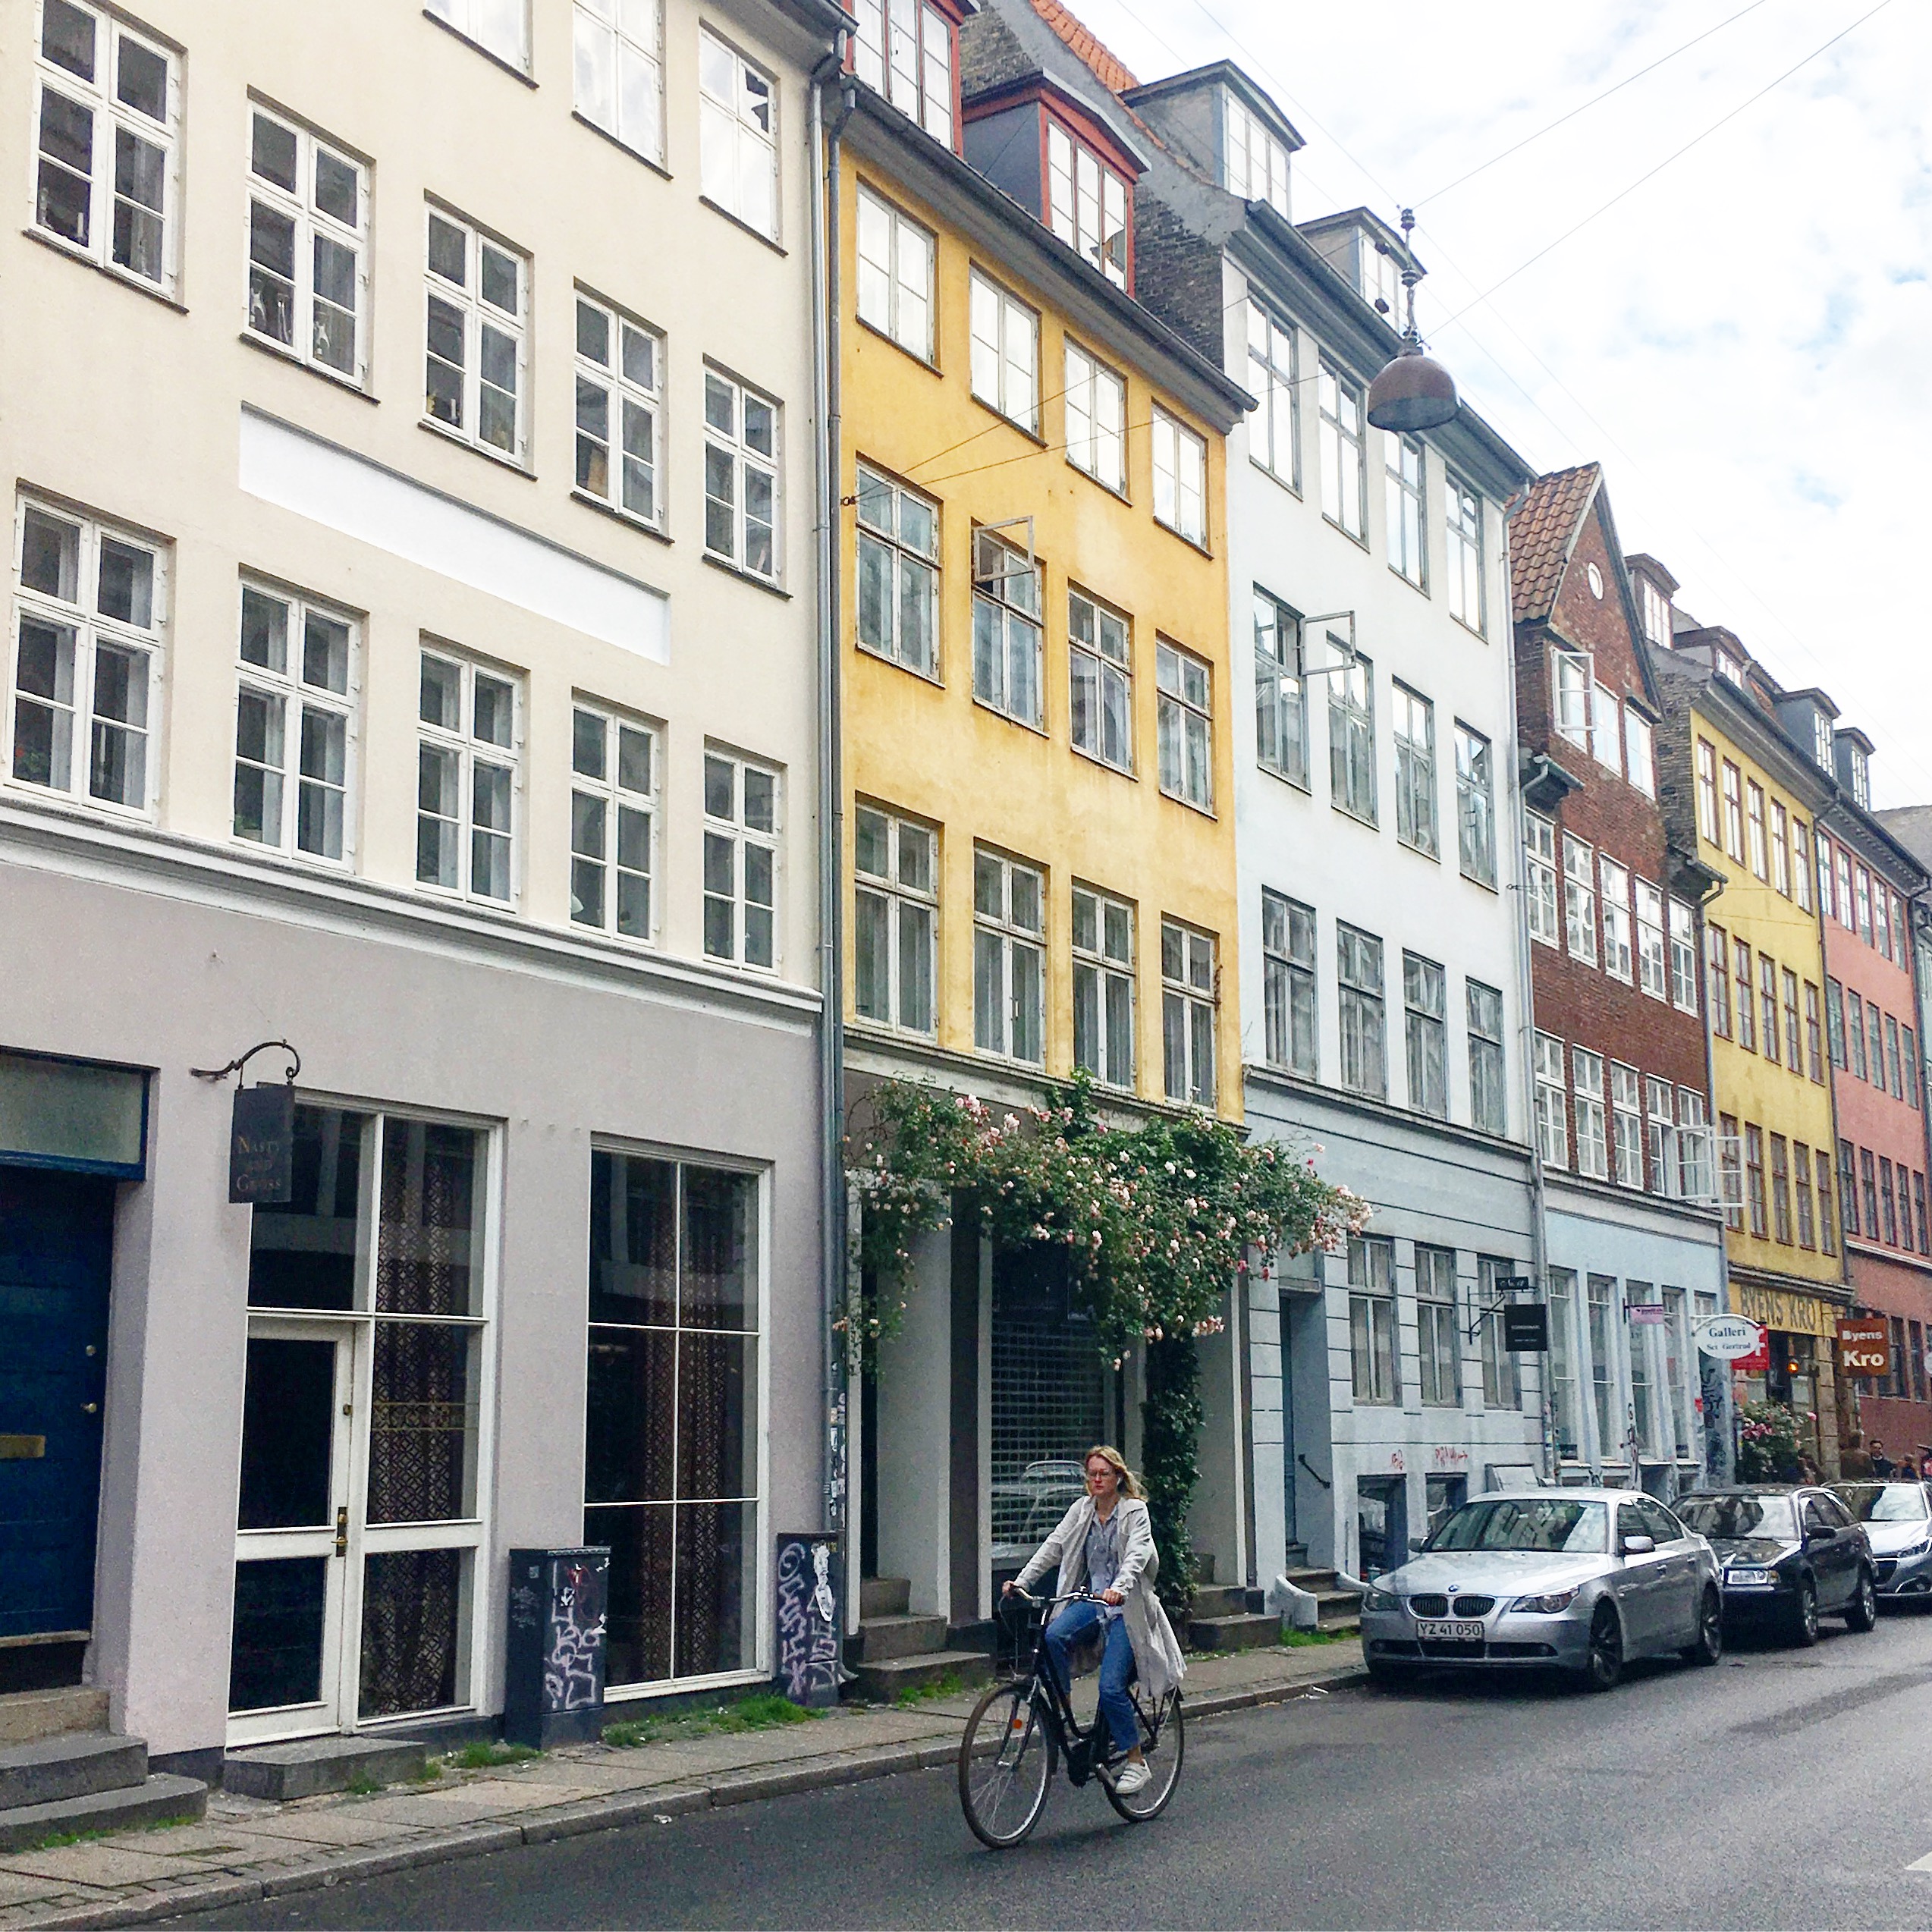 Rows of colorful buildings in Copenhagen